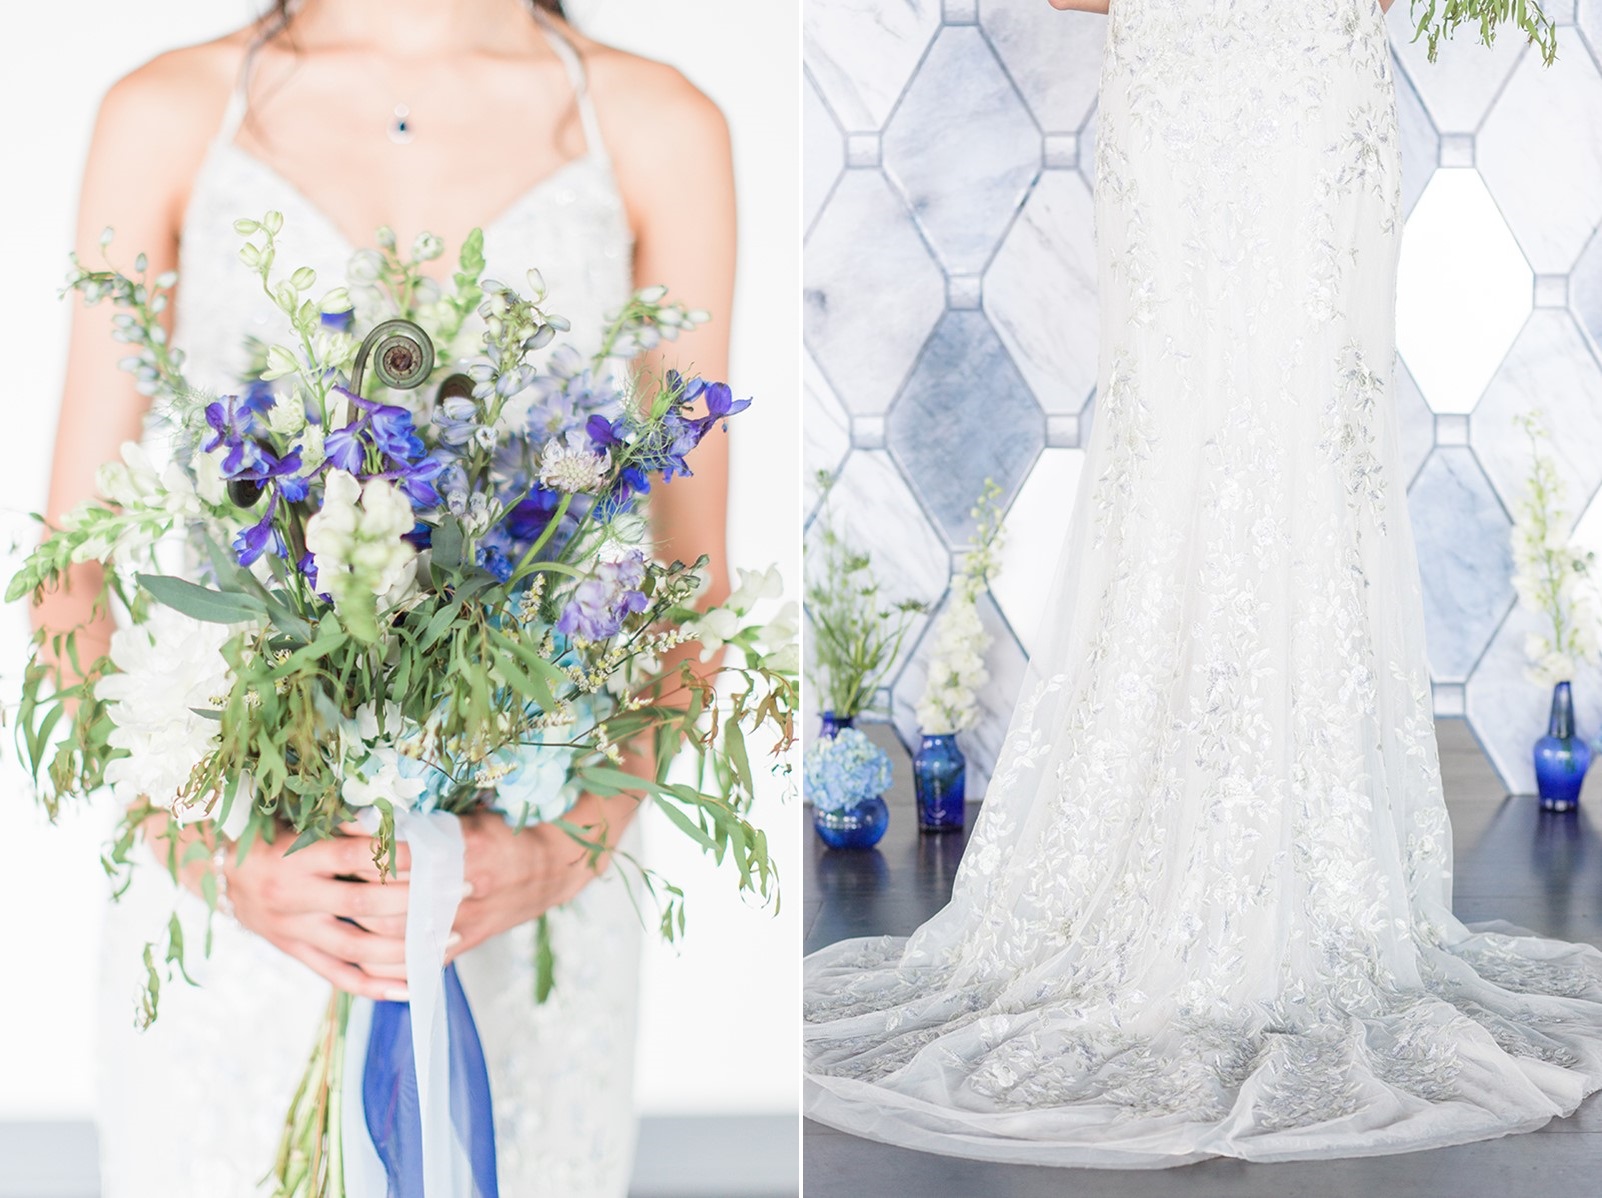 Blue Wedding Dress from David's Bridal